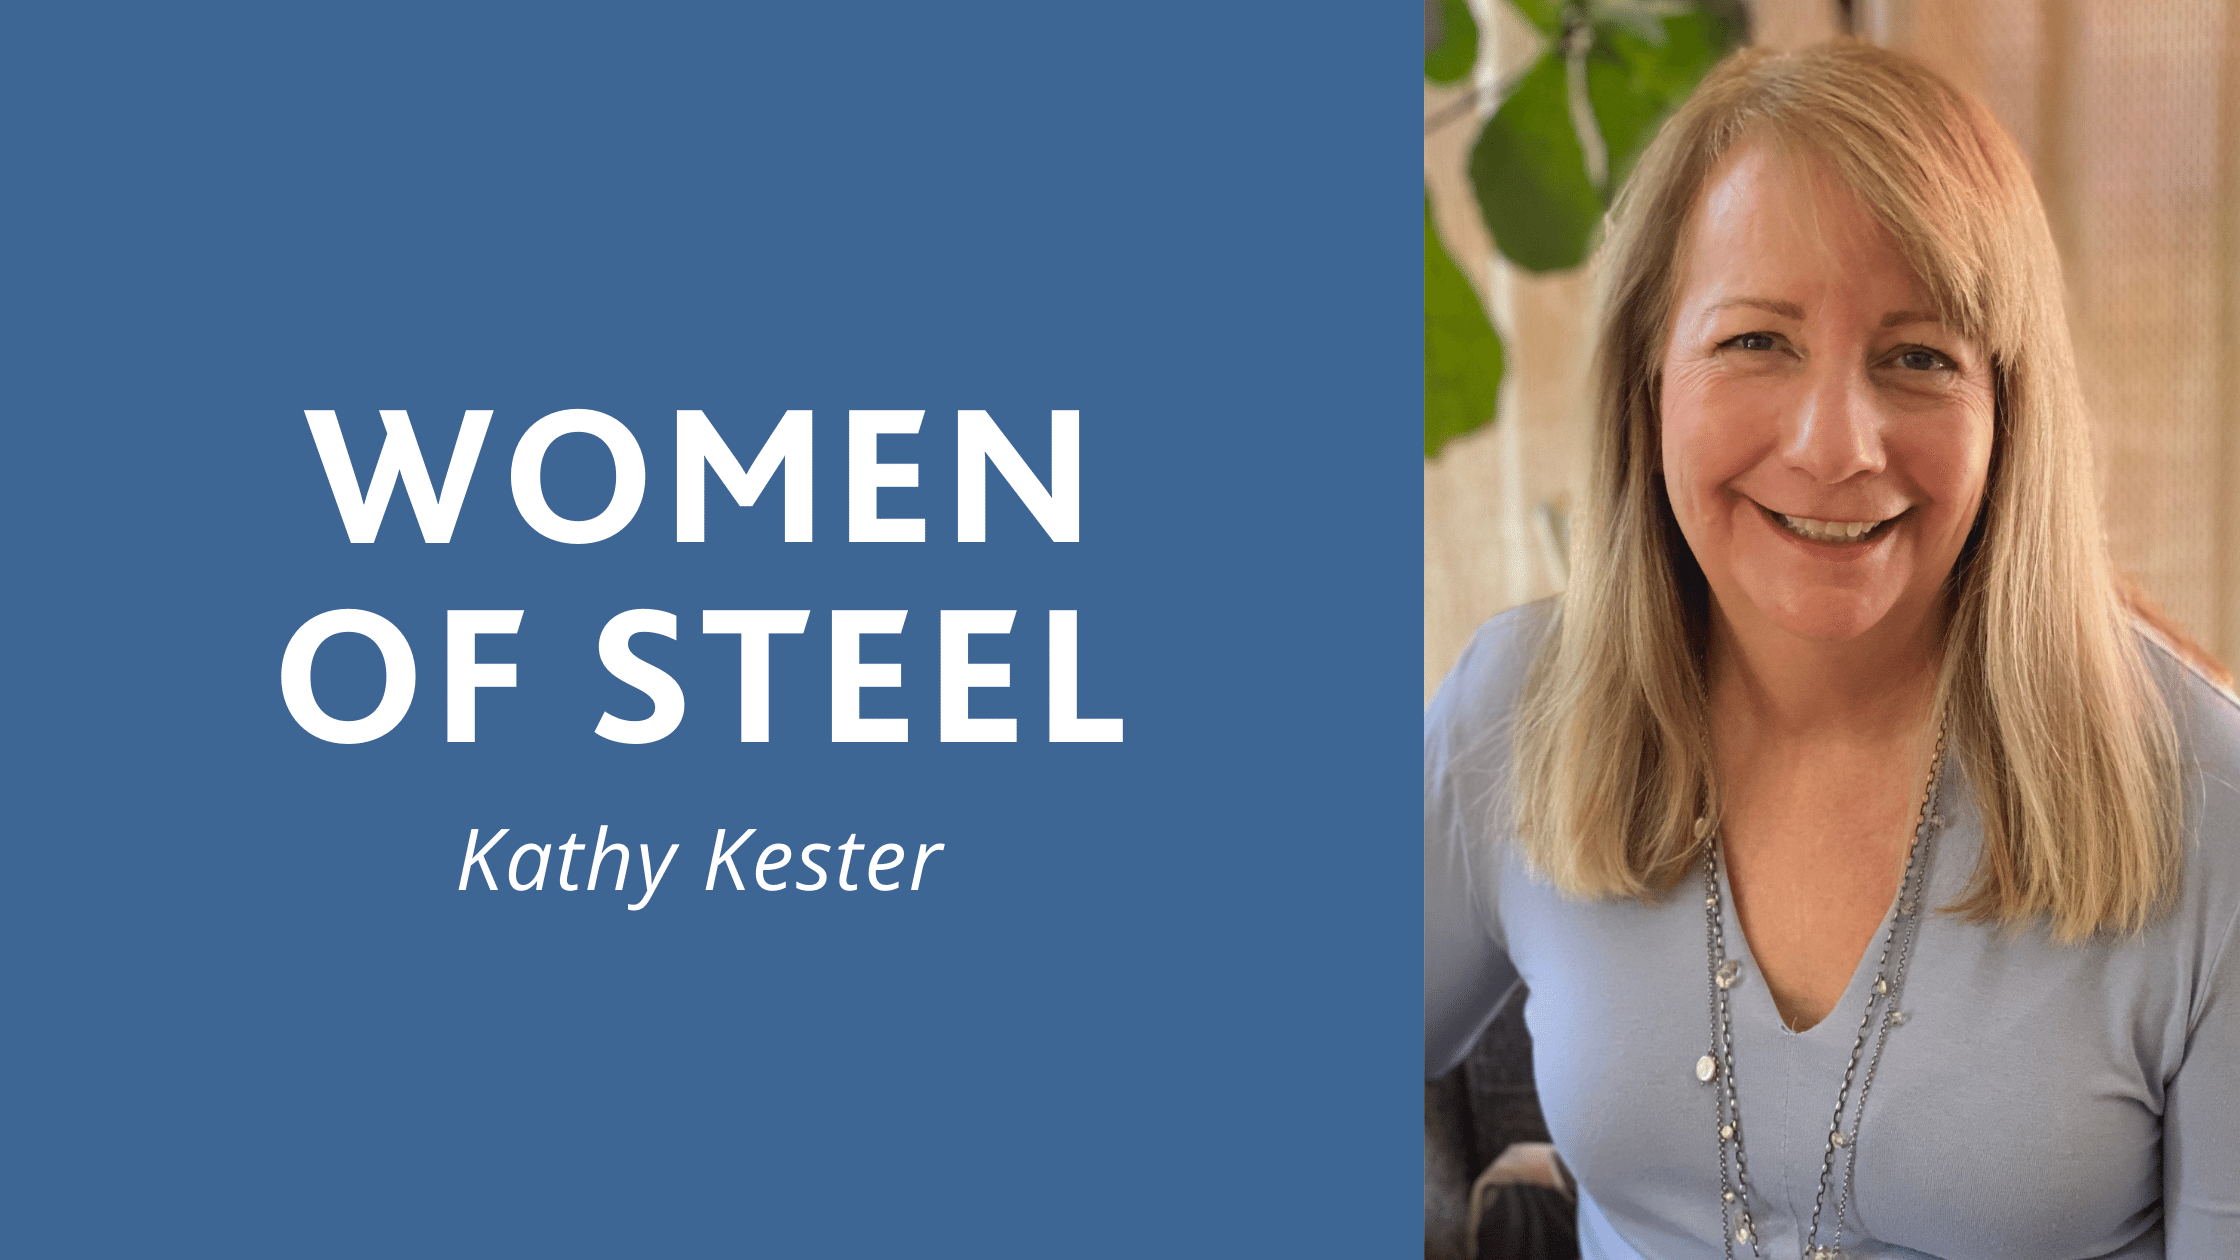 Kathy Kester